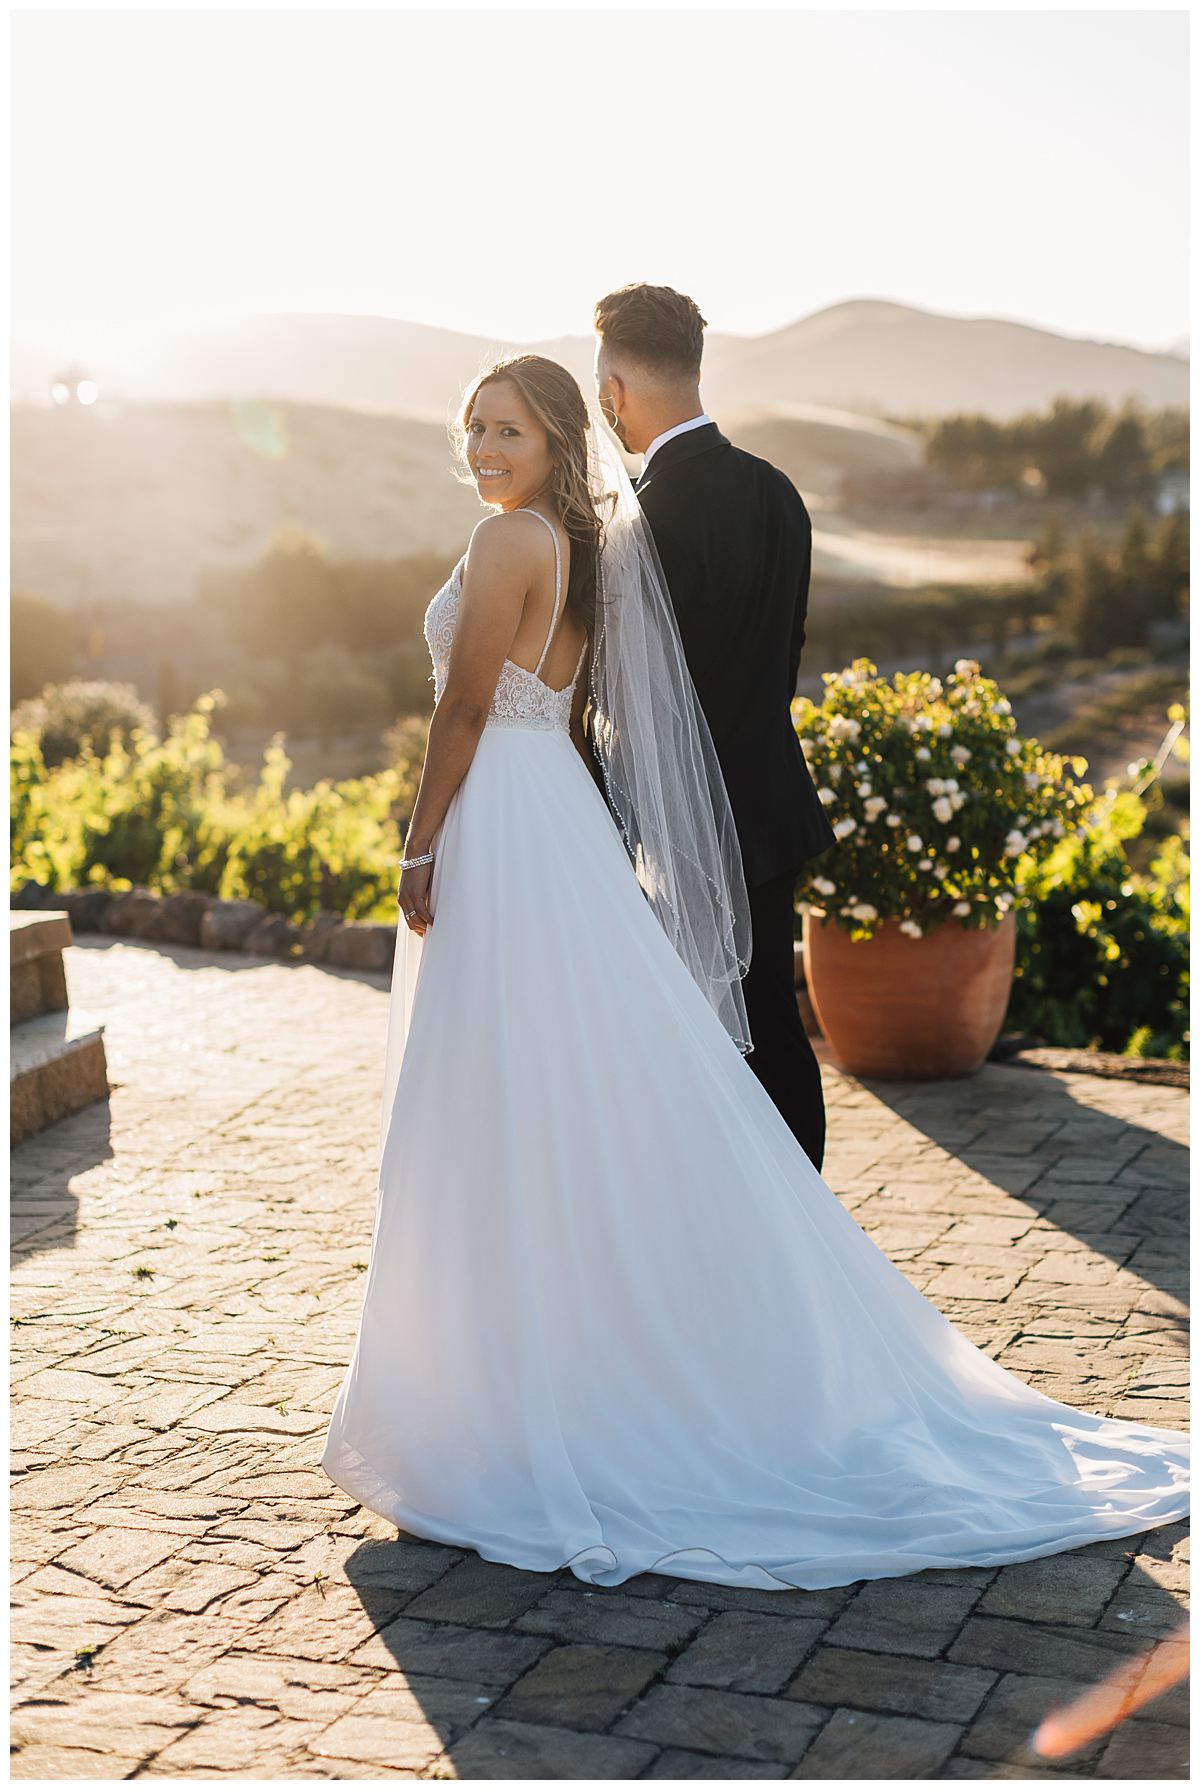 Sunset couples portraits at Viansa Winery Wedding